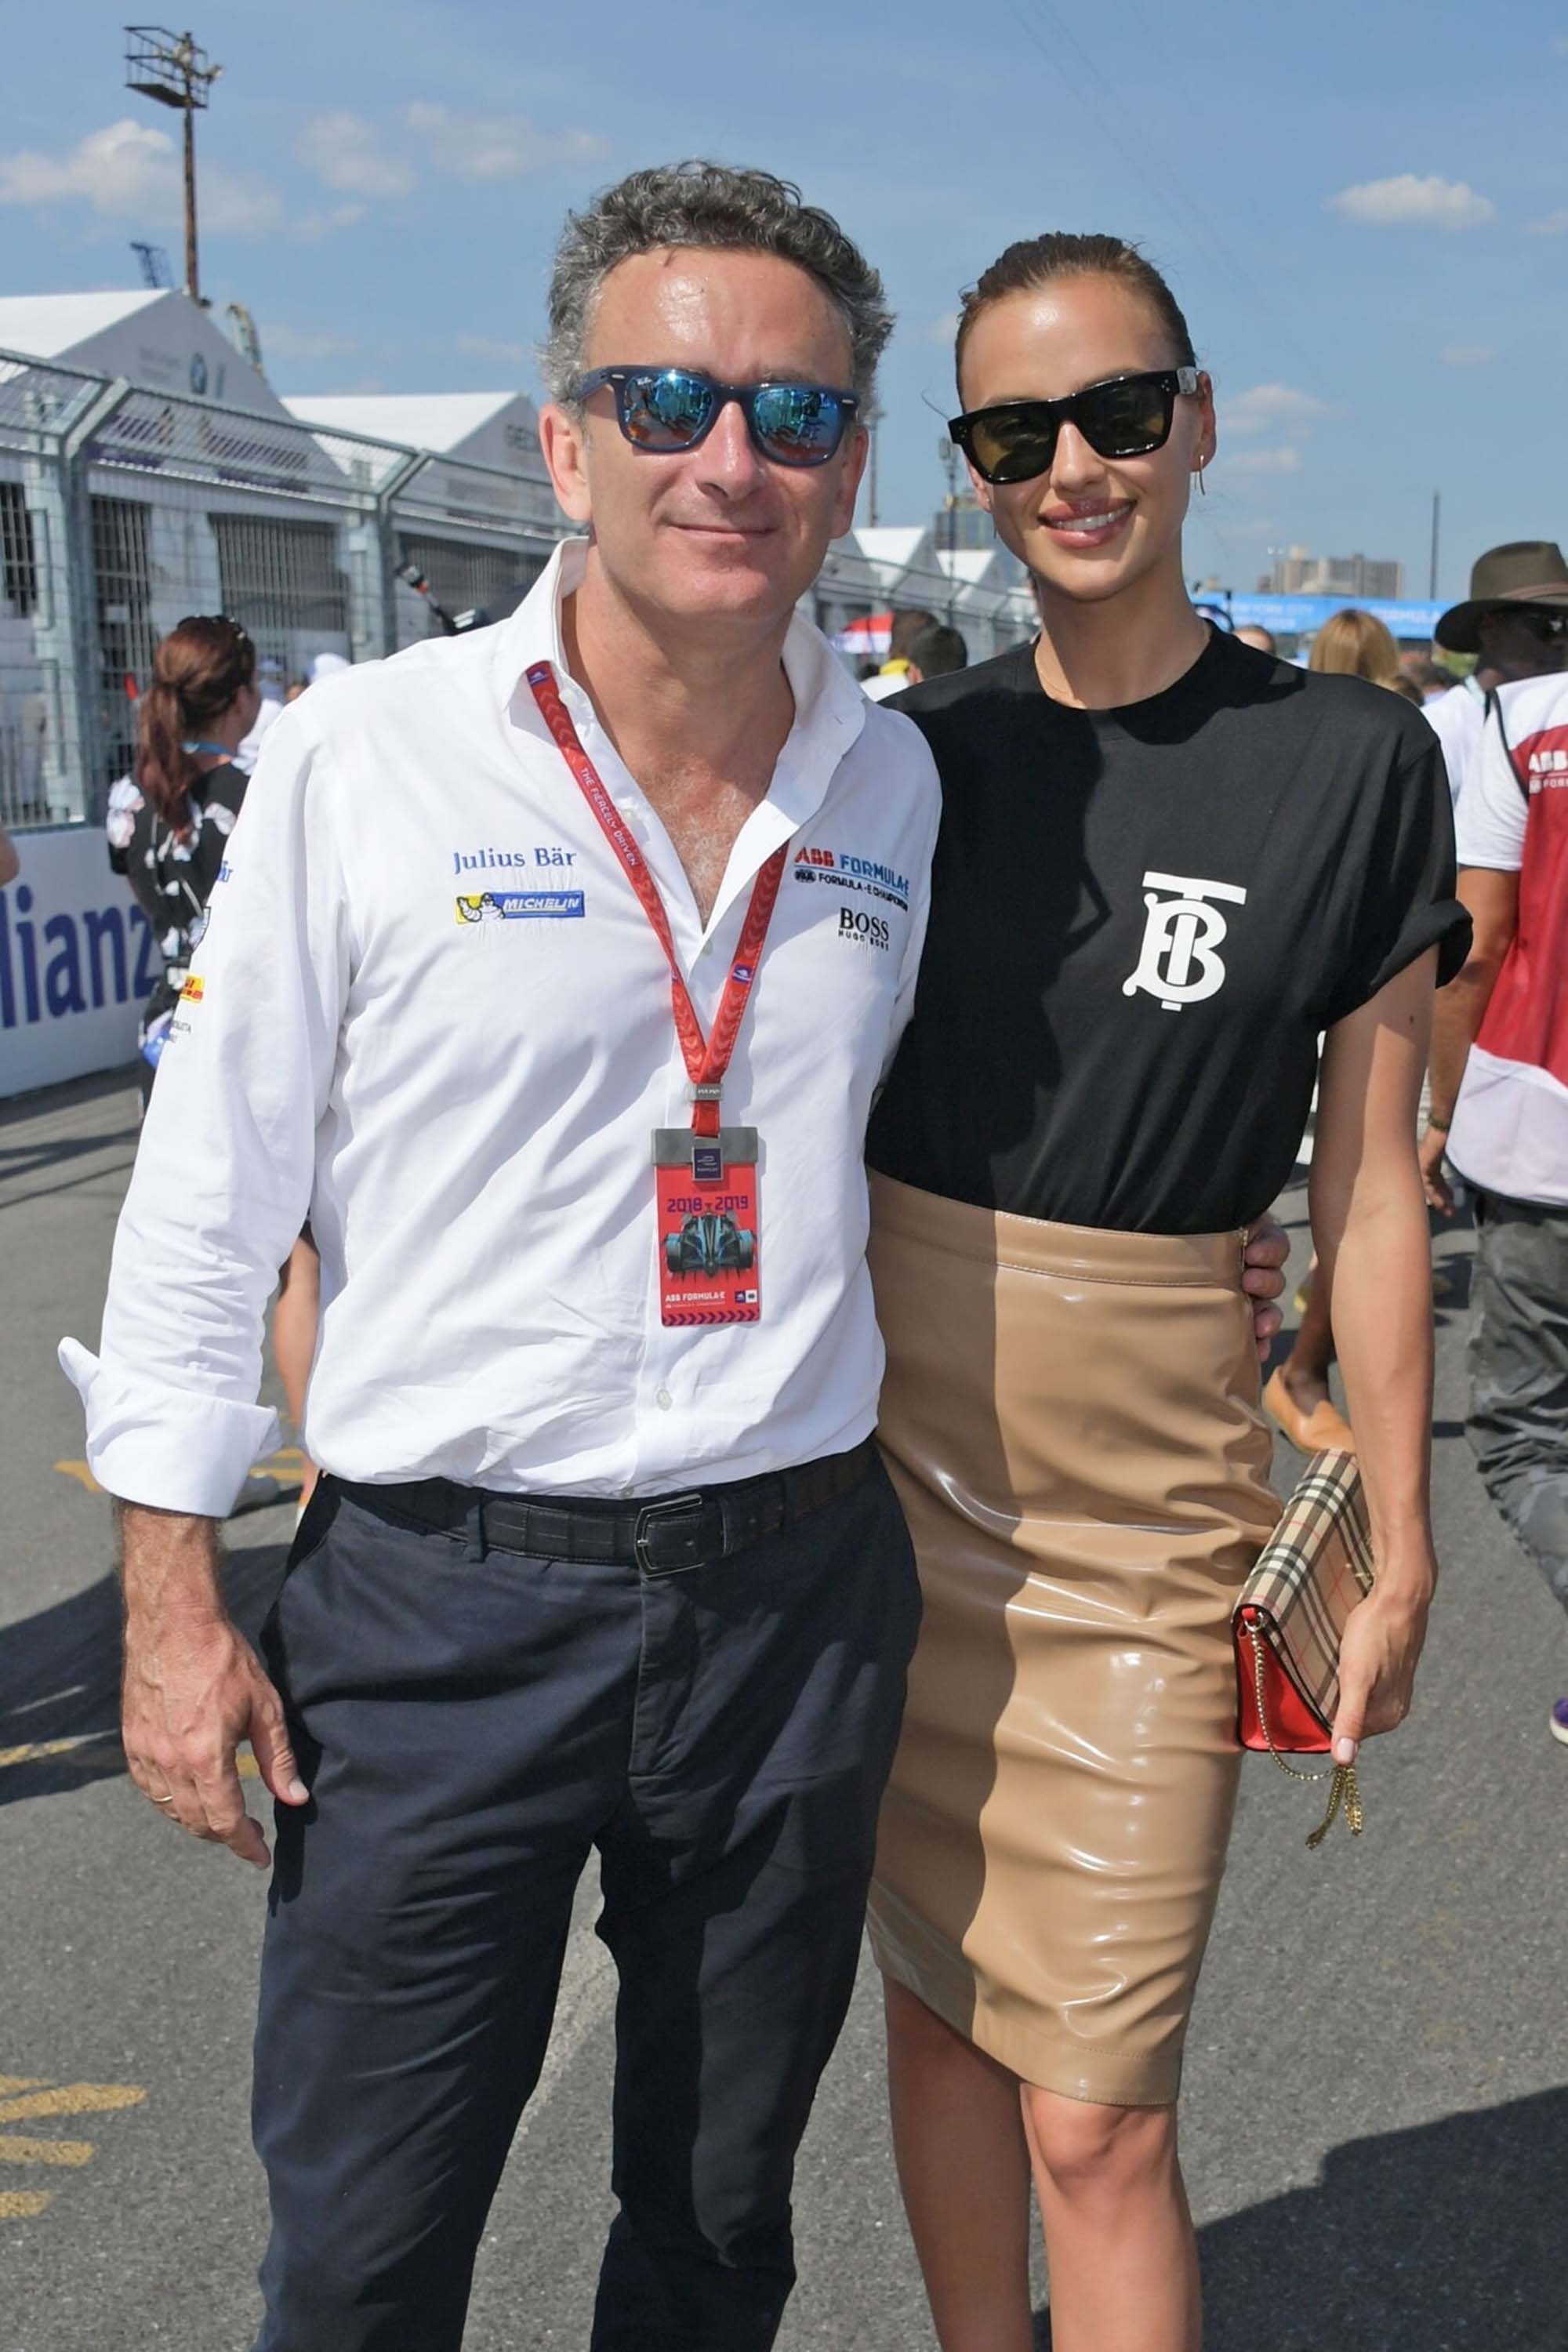 Irina Shayk attends Formu﻿la E 2019